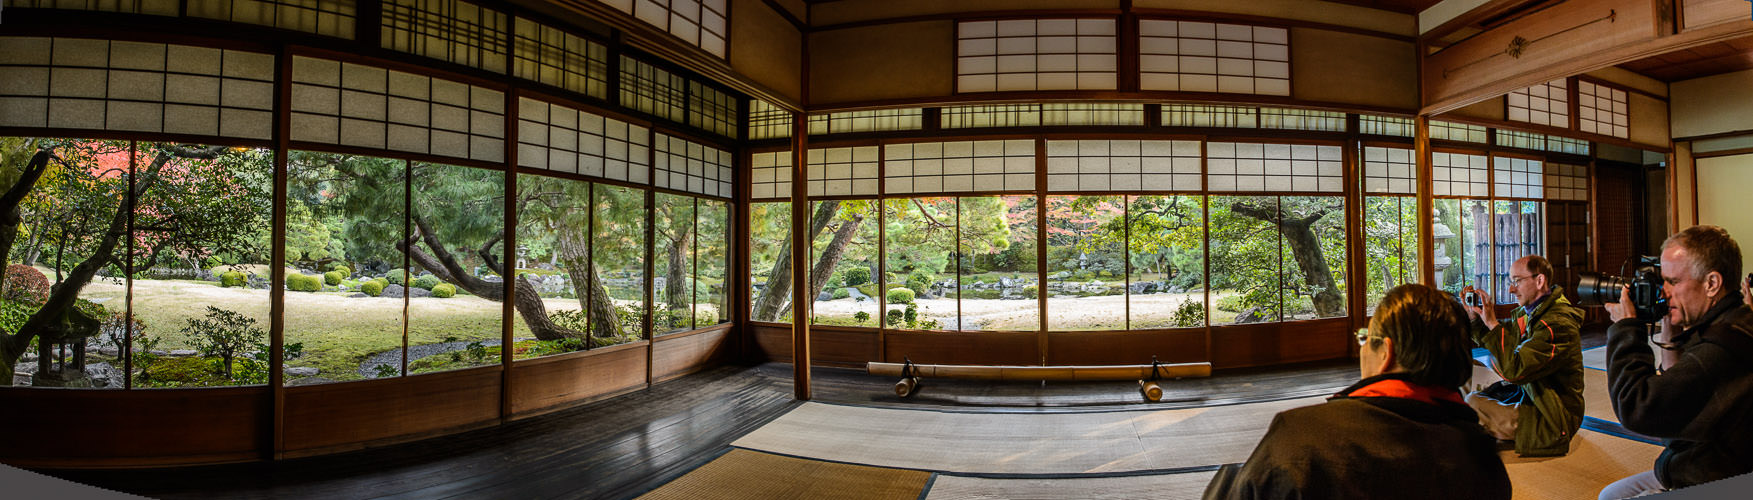 Seifuso Villa (清風荘) -- Kyoto, Japan -- Copyright 2013 Jeffrey Friedl, http://regex.info/blog/